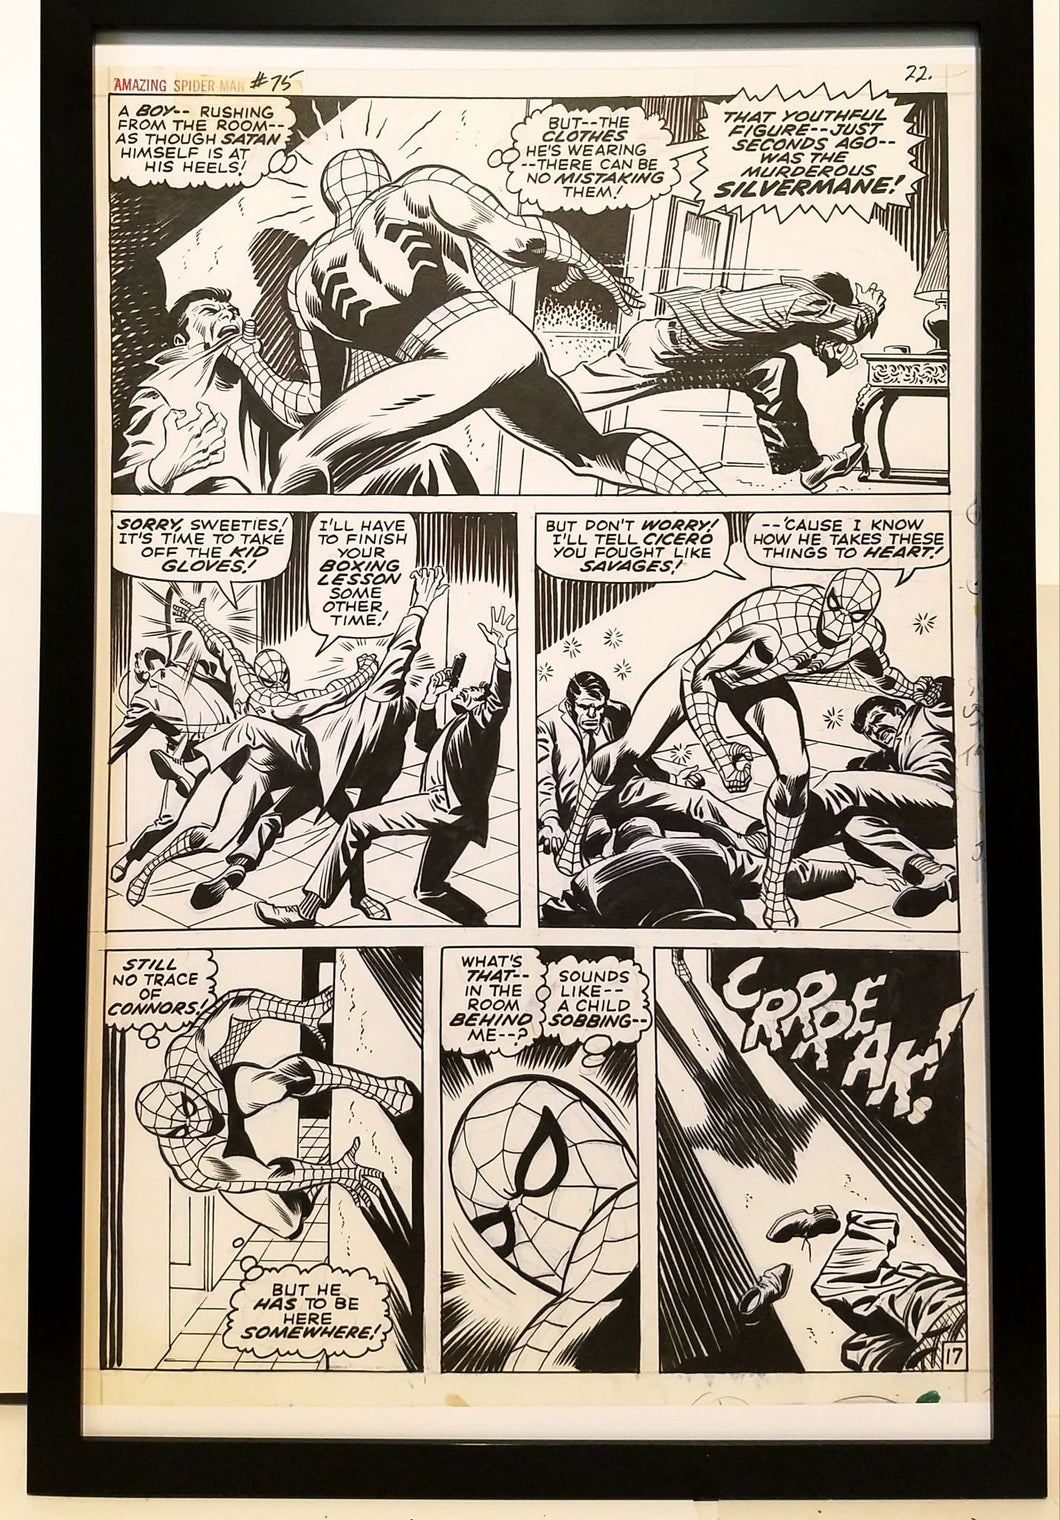 Amazing Spider-Man #75 pg. 17 John Romita 11x17 FRAMED Original Art Poster Marvel Comics